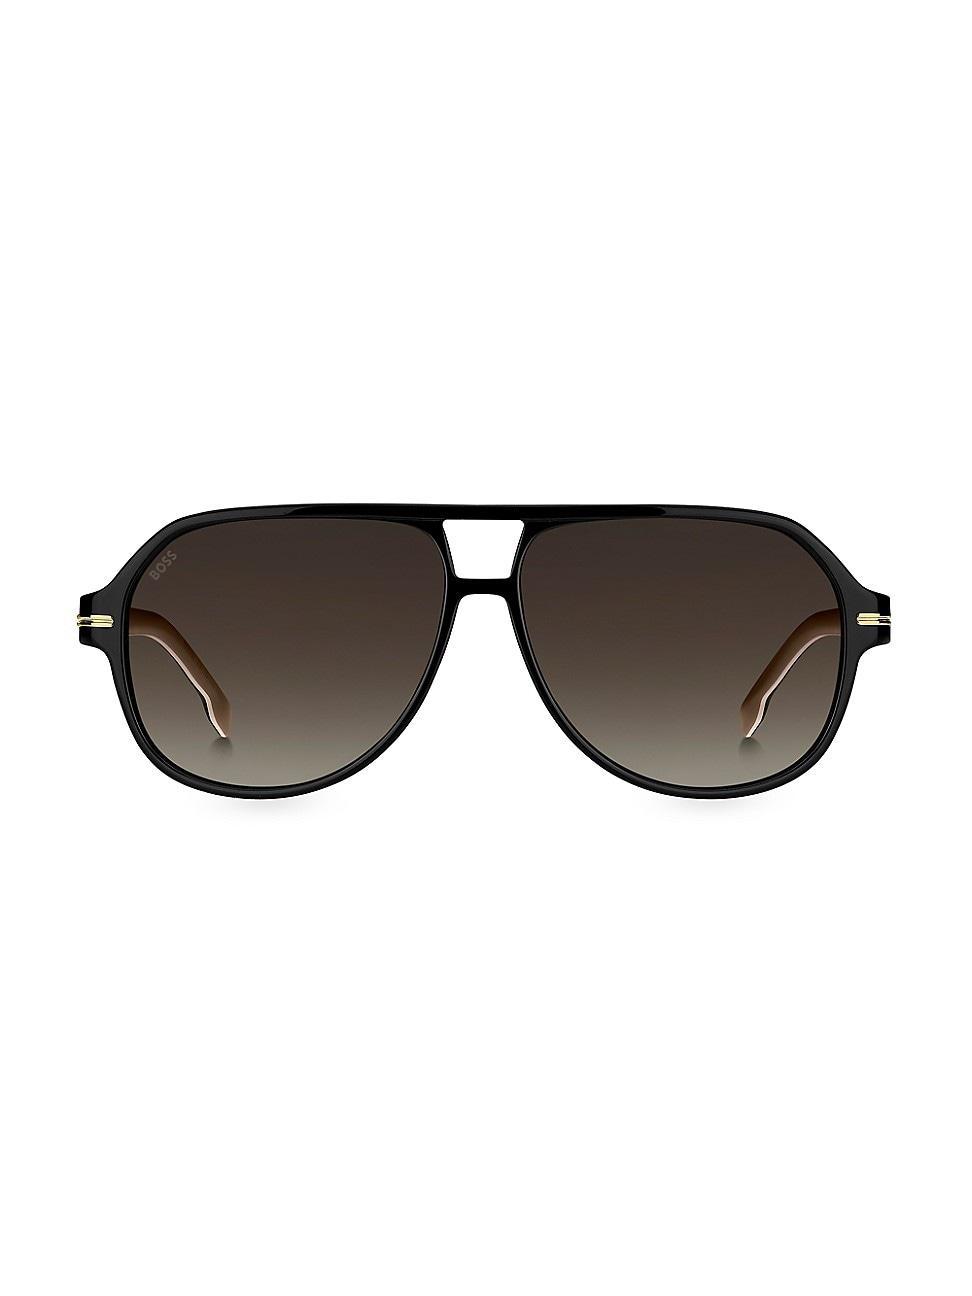 BOSS 59mm Rectangular Sunglasses Product Image